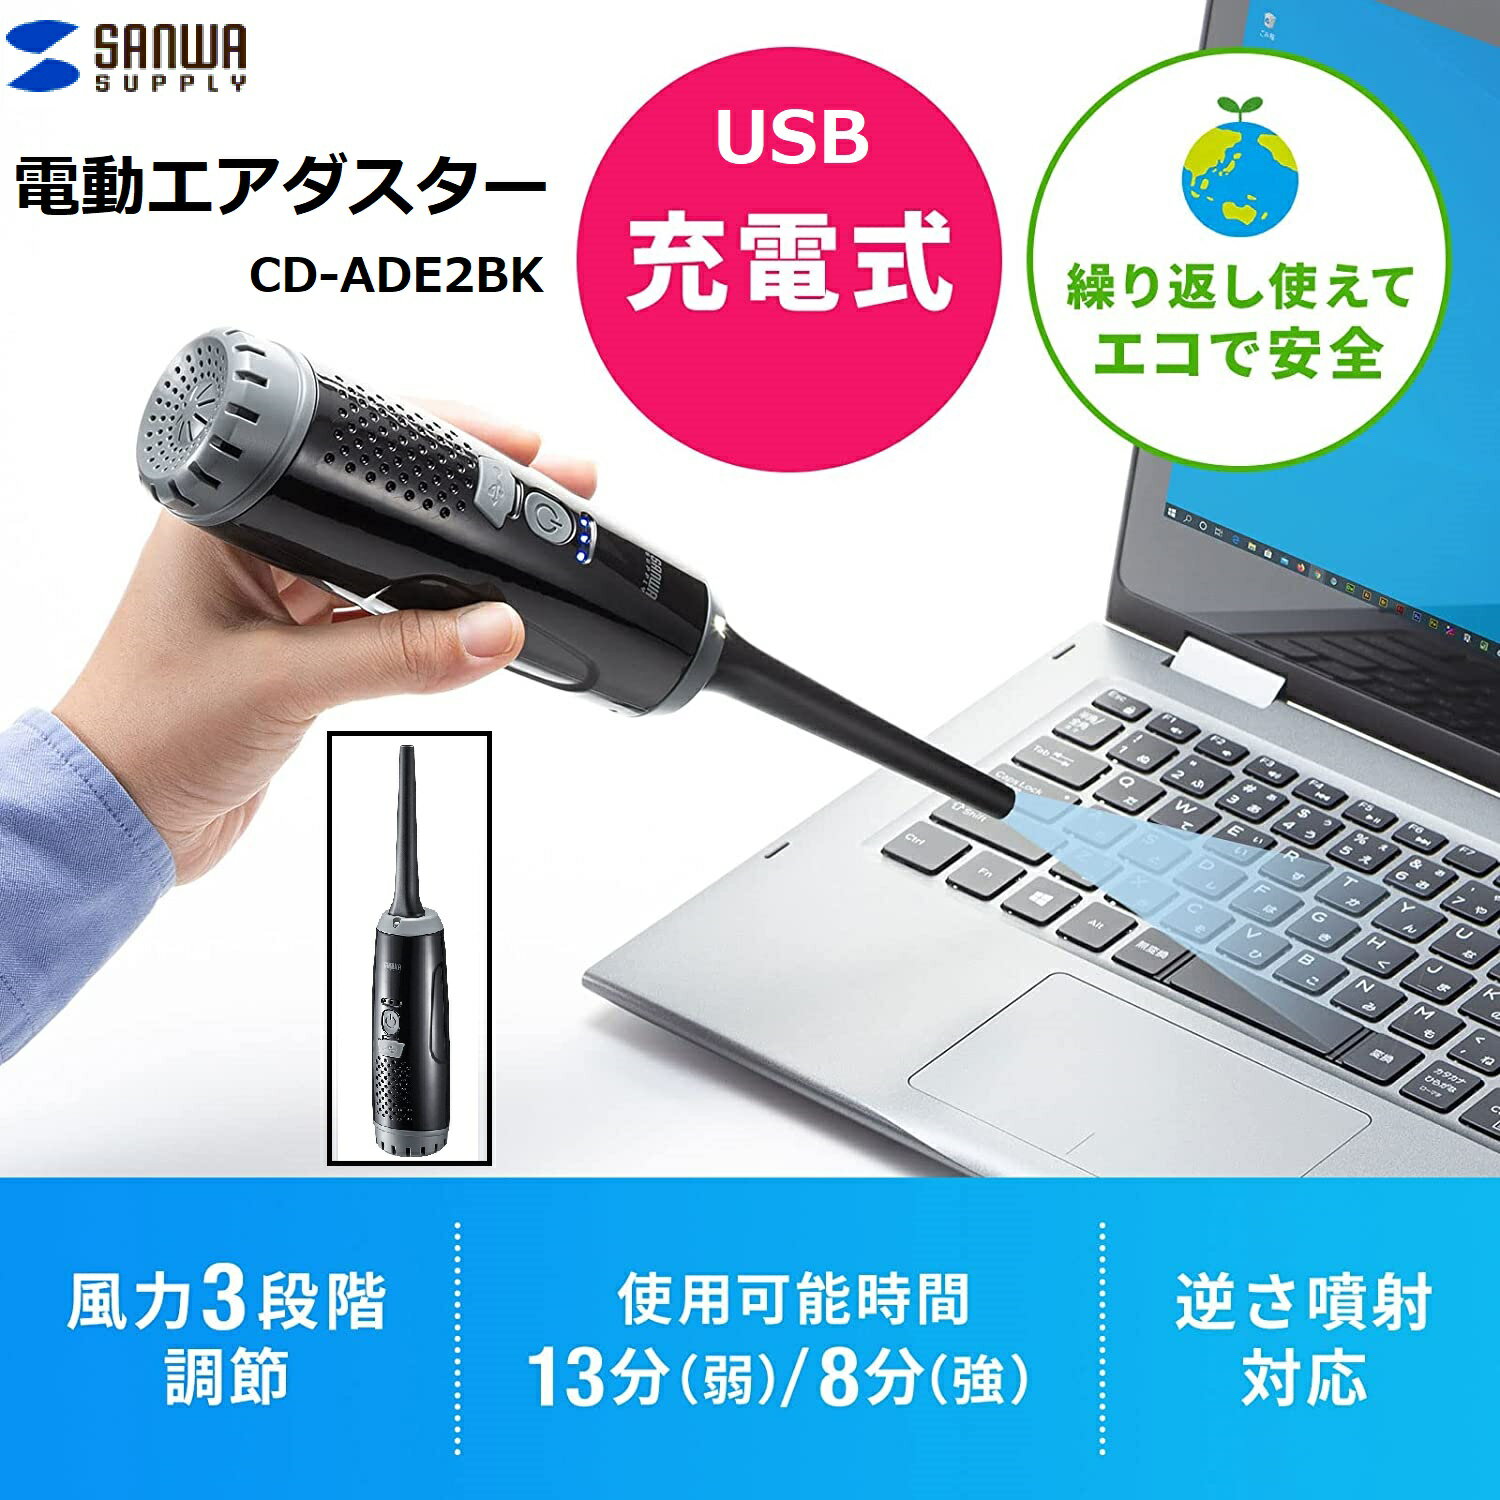 【RSL】 サンワサプライ / Sanwa Supply USB充電式 電動エアダスター CD-ADE2BK ｜ 風量3段階調整可 ペン型 LEDライト搭載